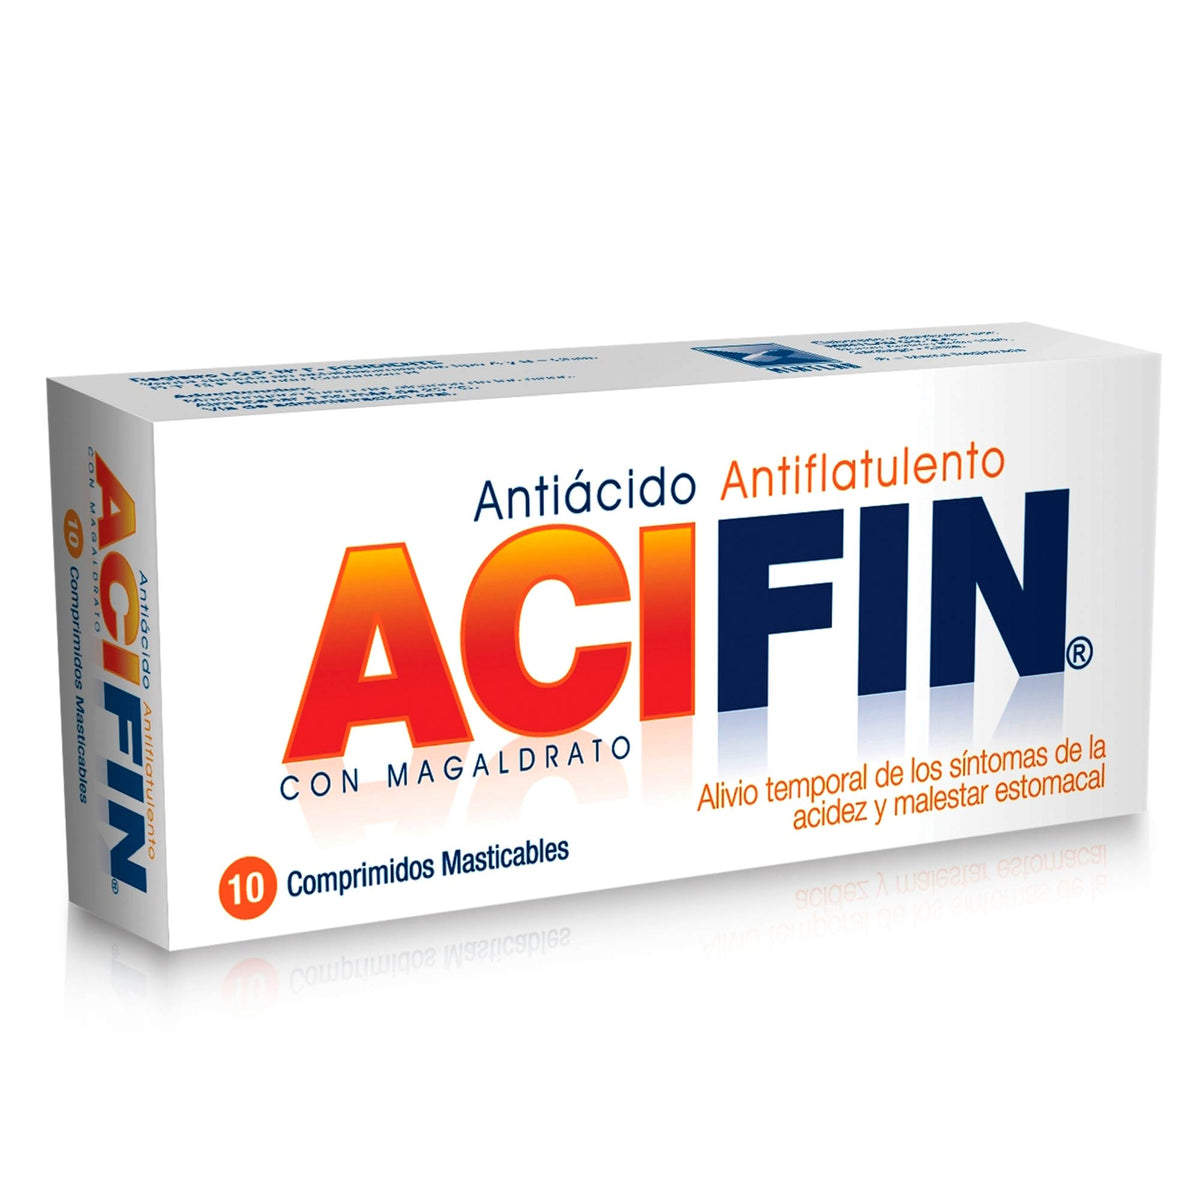 Acifin Comprimidos Masticables